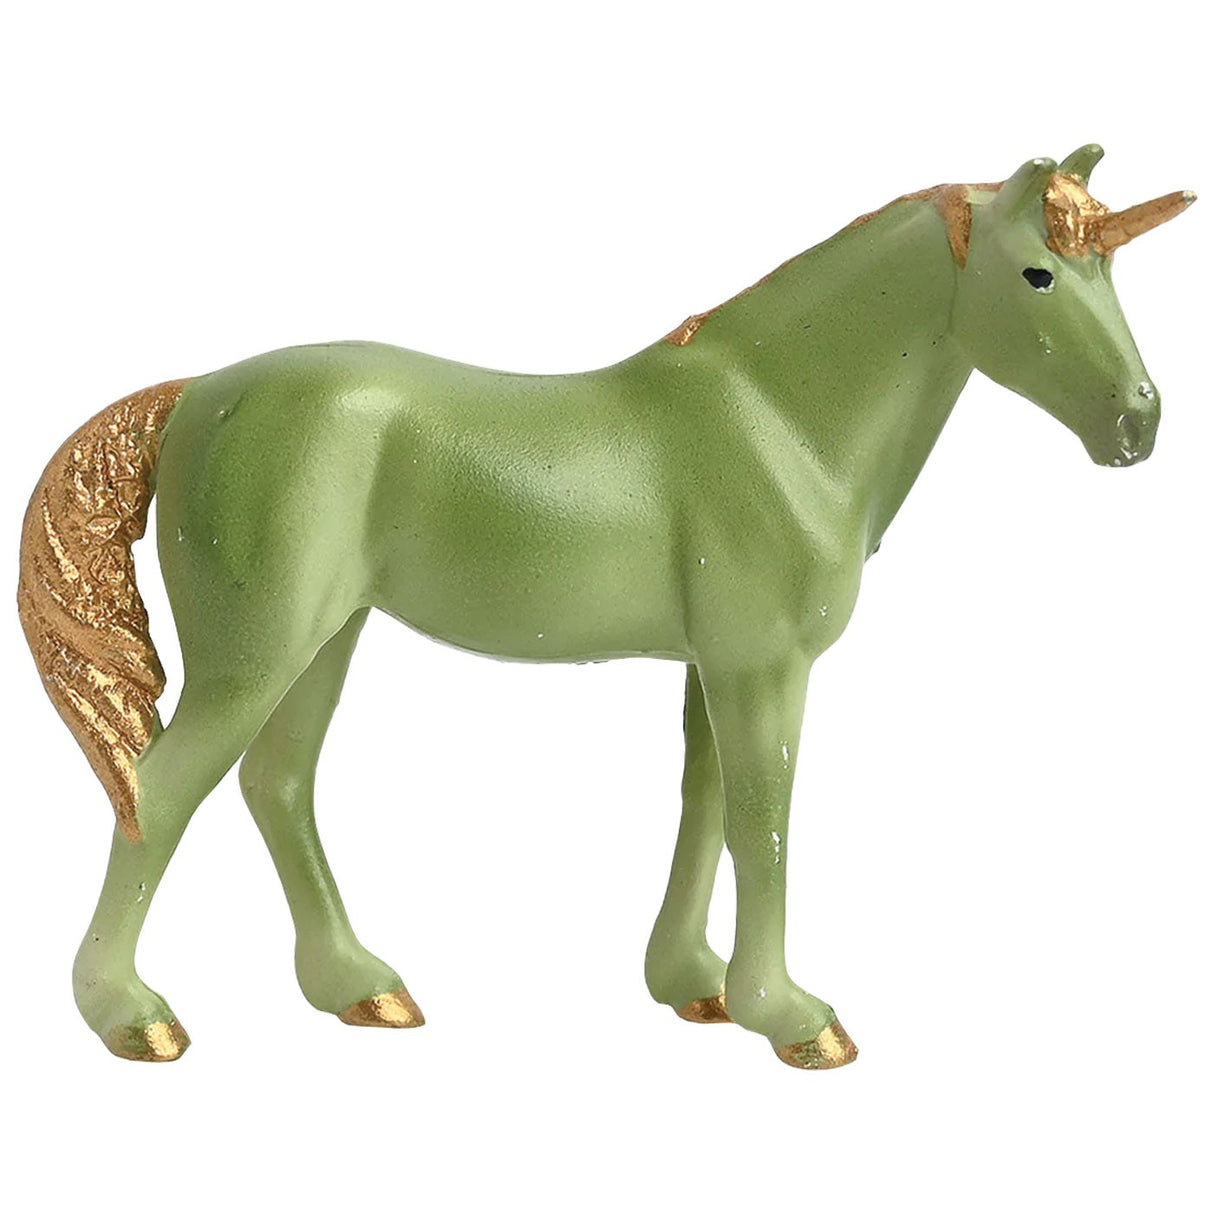 Breyer Mini Whinnies Unicorn Surprise - Series 2